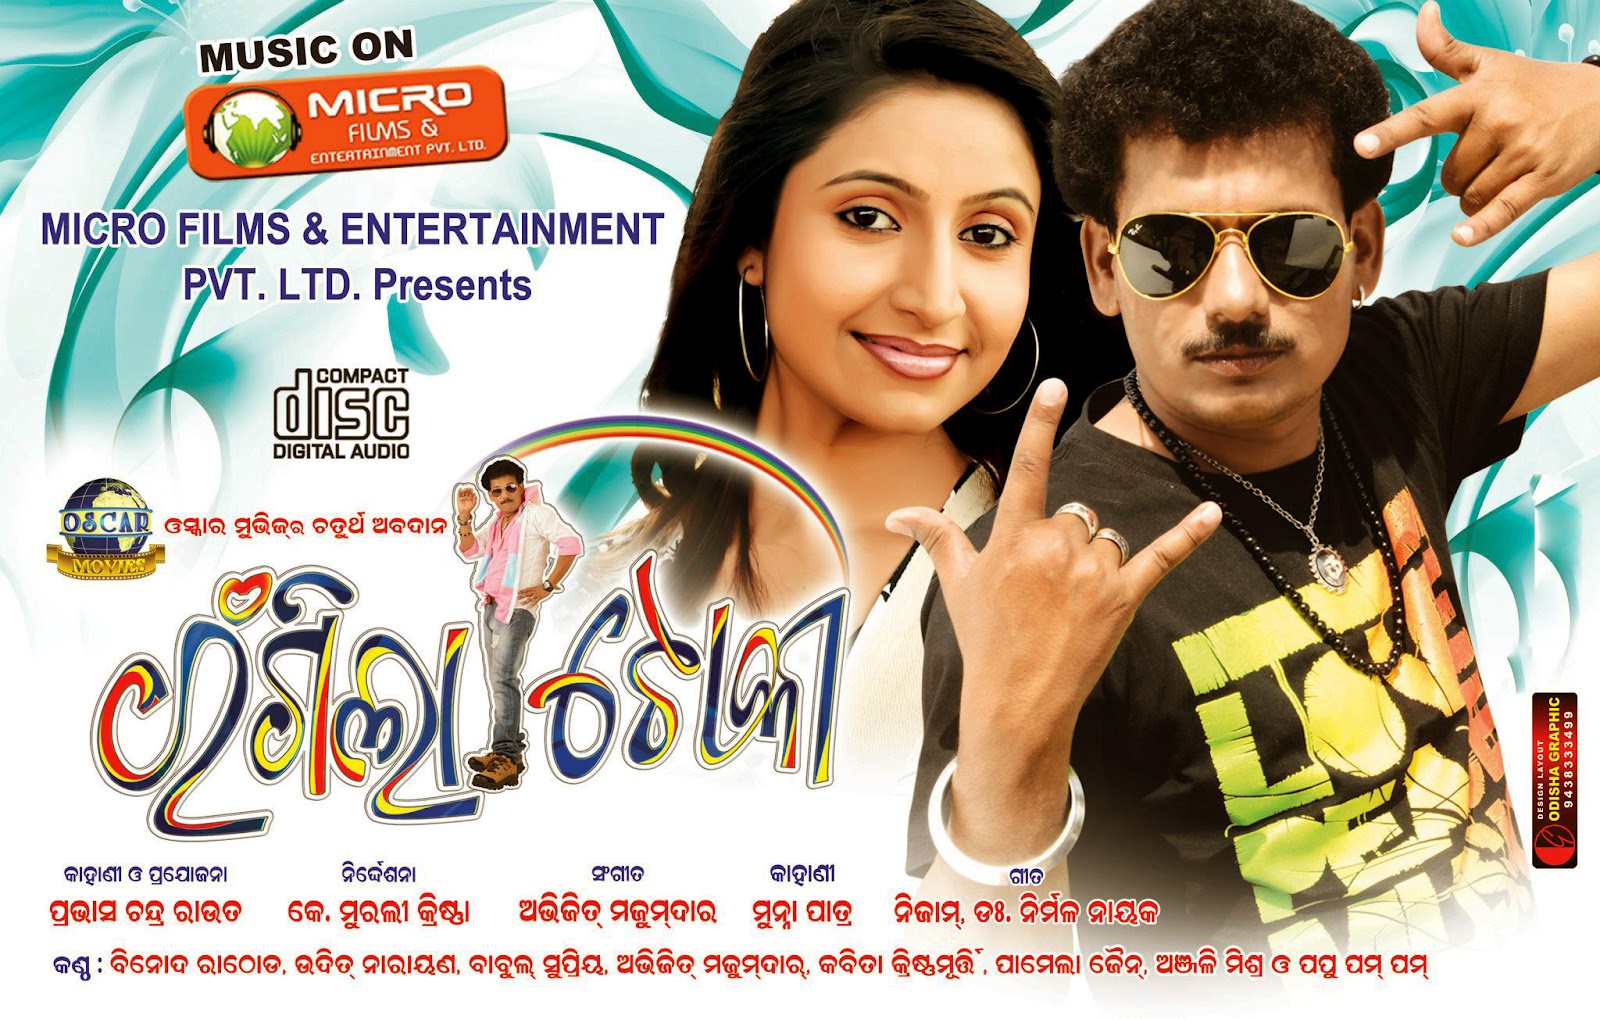 Up coming new Oriya film Rangila Toka - Oriya Movie Rangila Toka Songs, Vid...